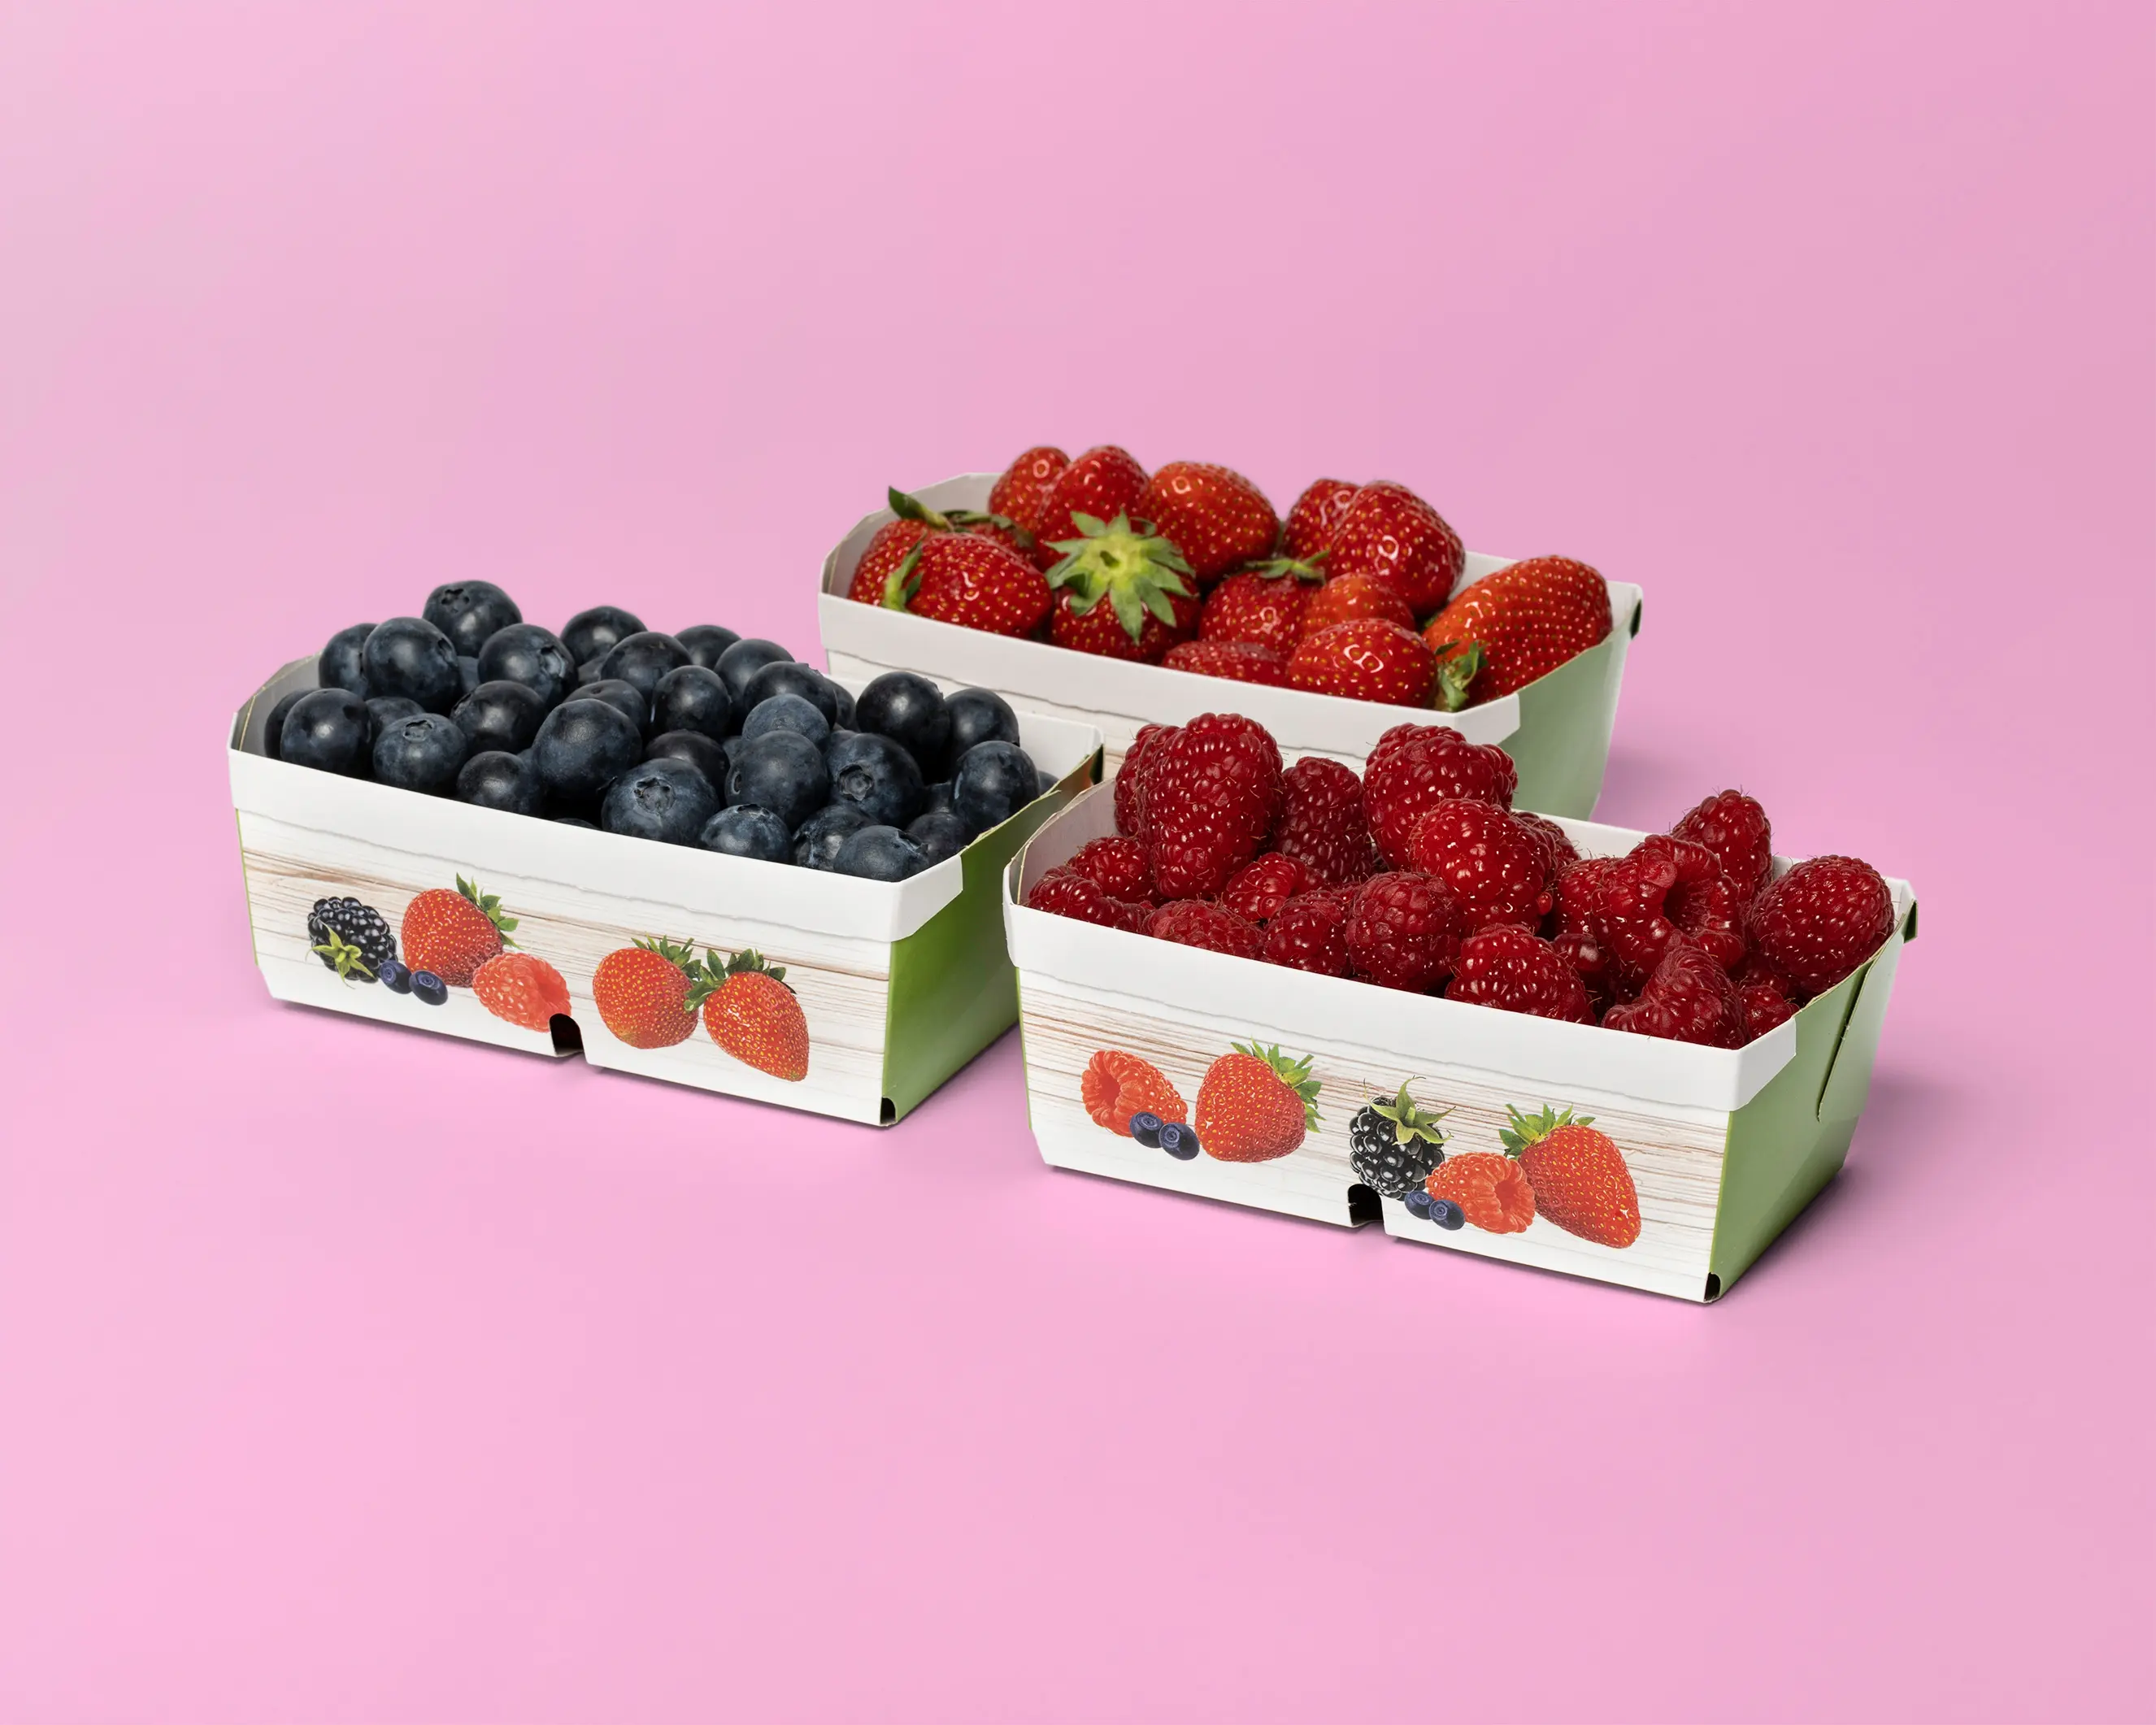 Beerenschale, drei Schalen mit 250g gefüllt mit Erdbeeren, Heidelbeeren, Himbeeren, pinker Hintergrund